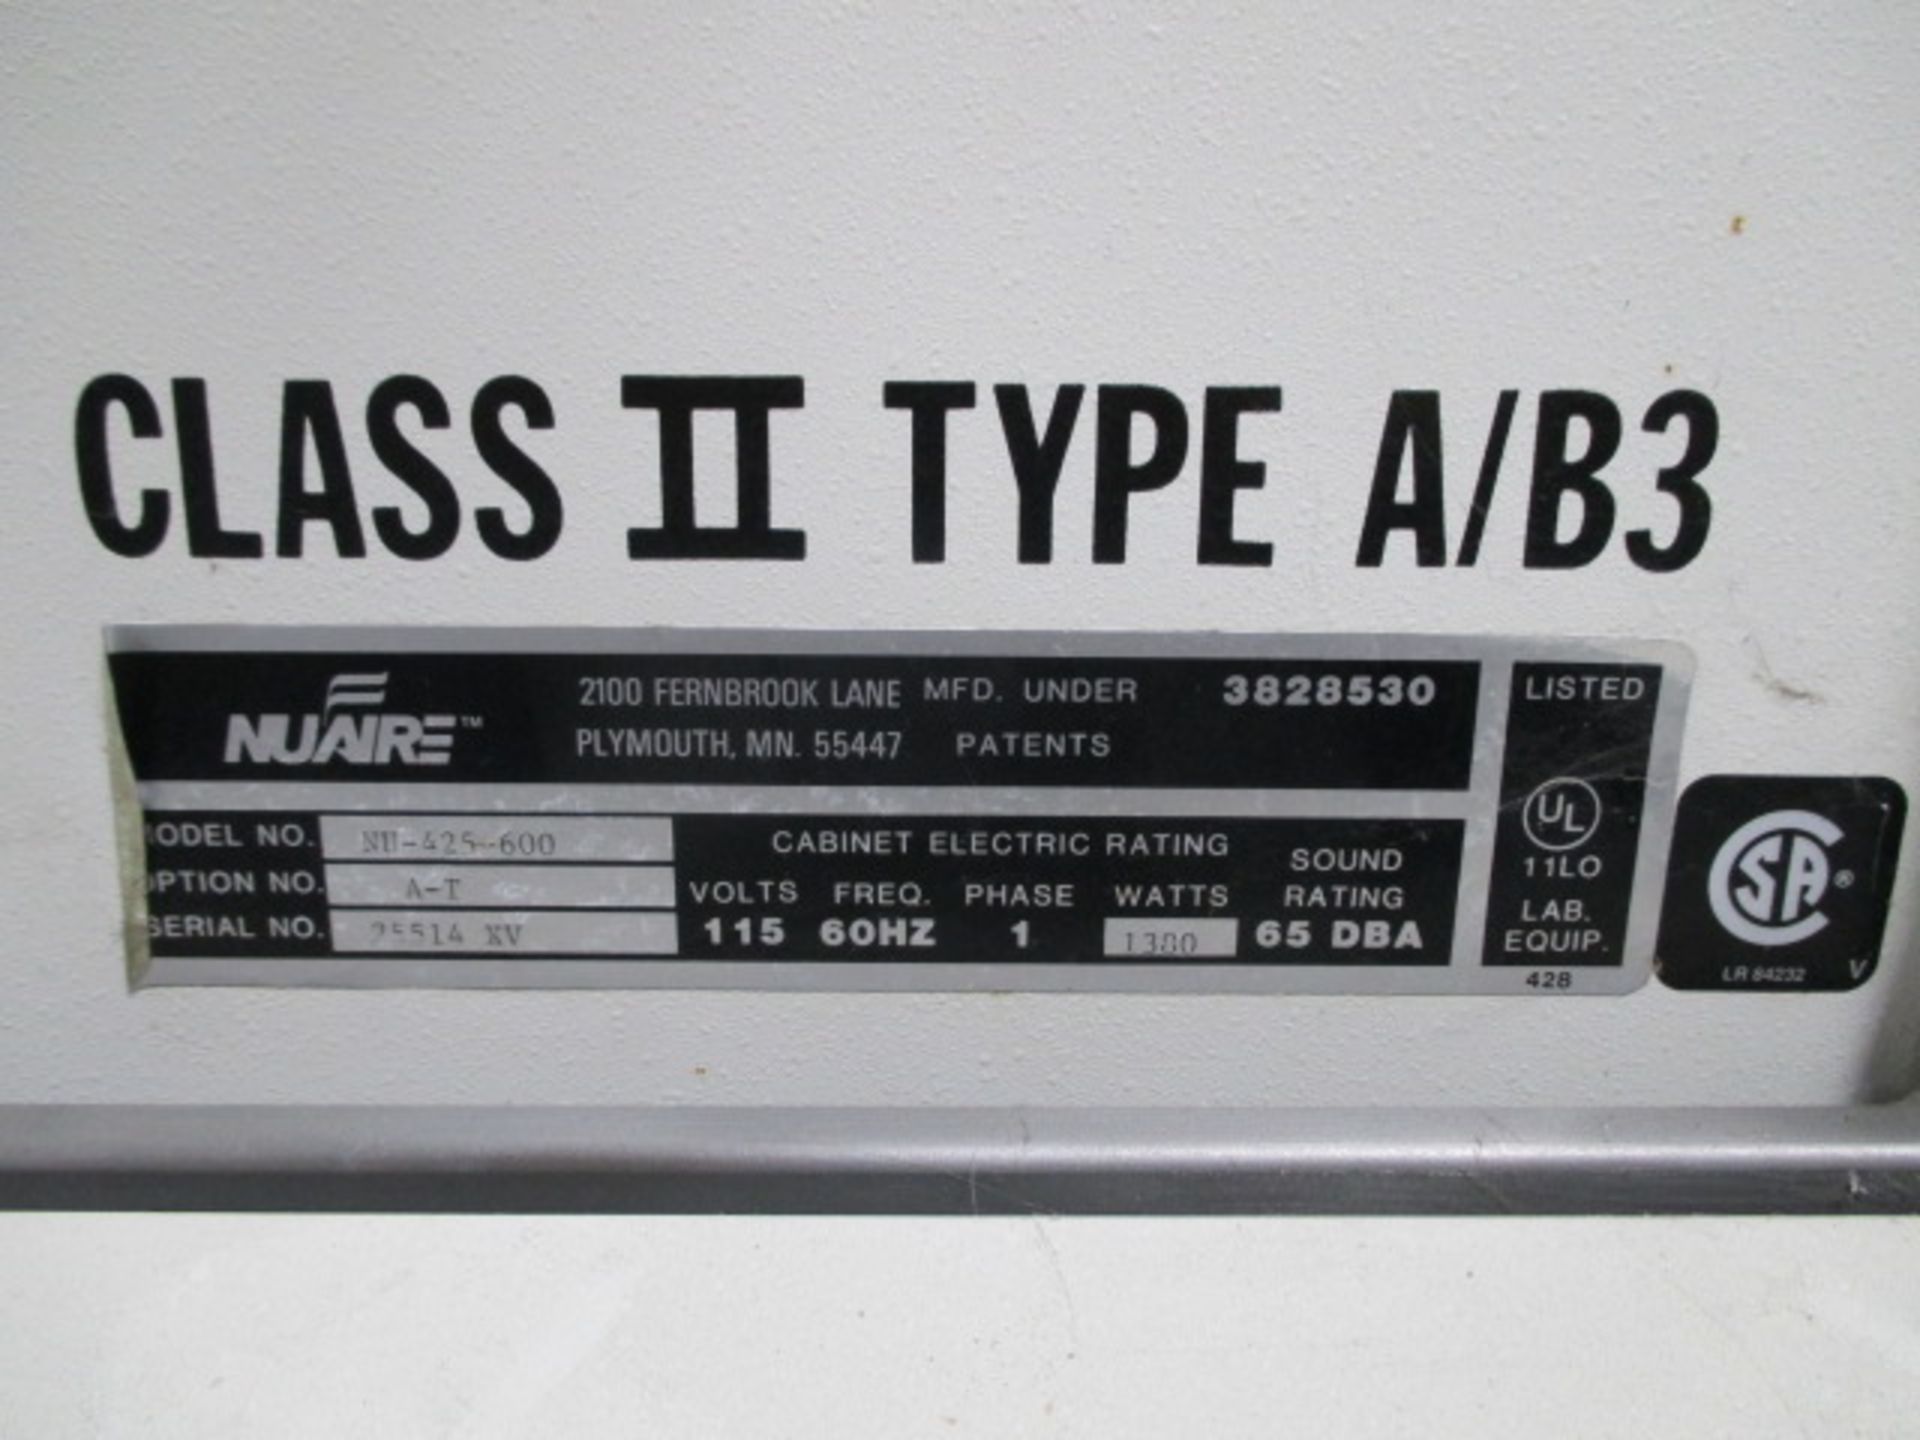 Nuaire hood, model NU-425-600, 72" wide x 24" deep x 29" high chamber, Class II Type A/B3 - Image 7 of 9